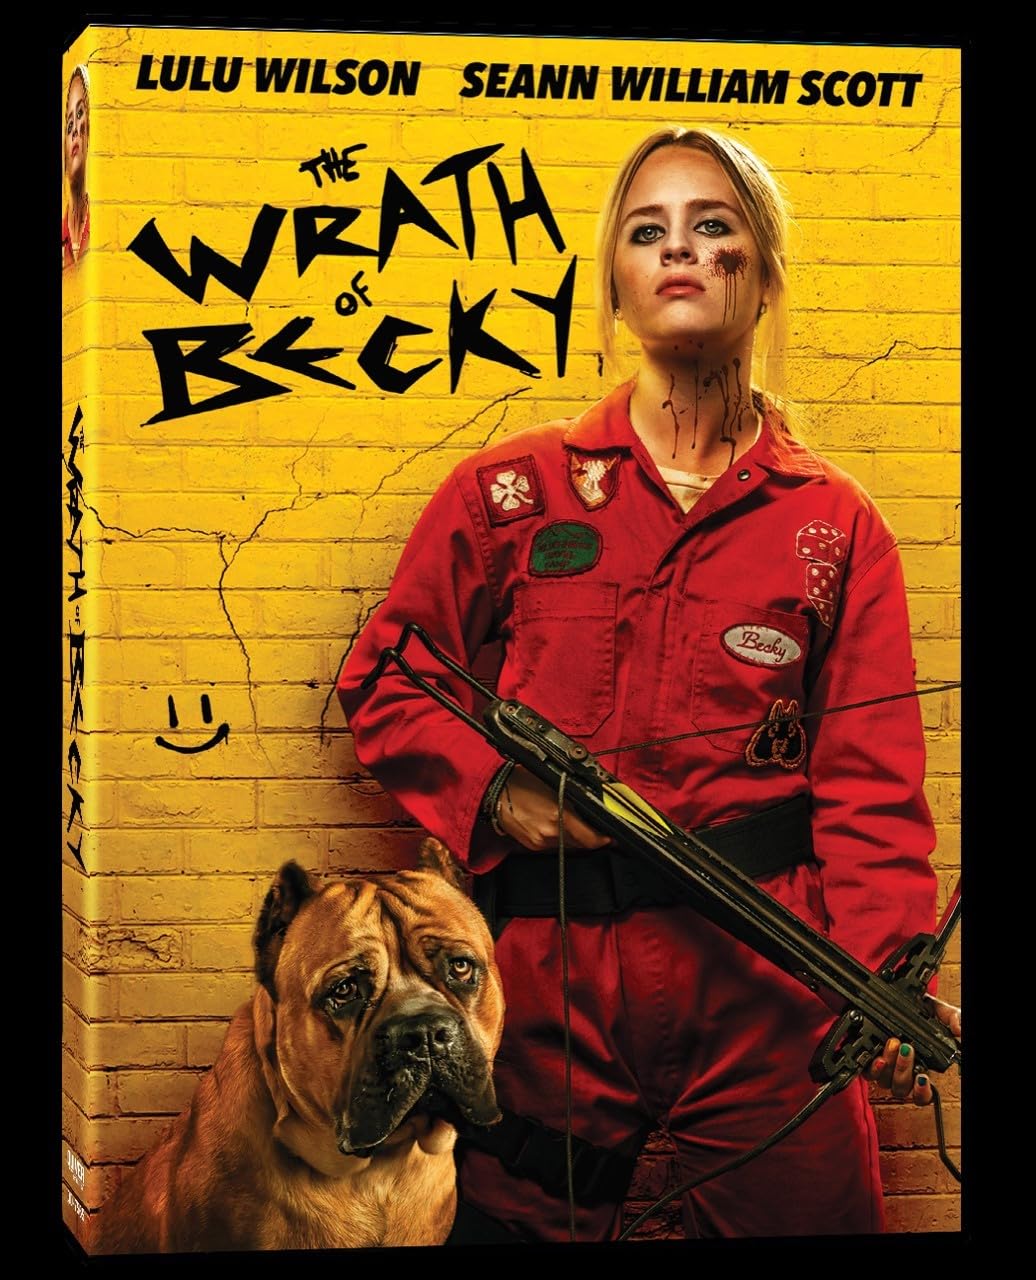 WRATH OF BECKY [DVD]